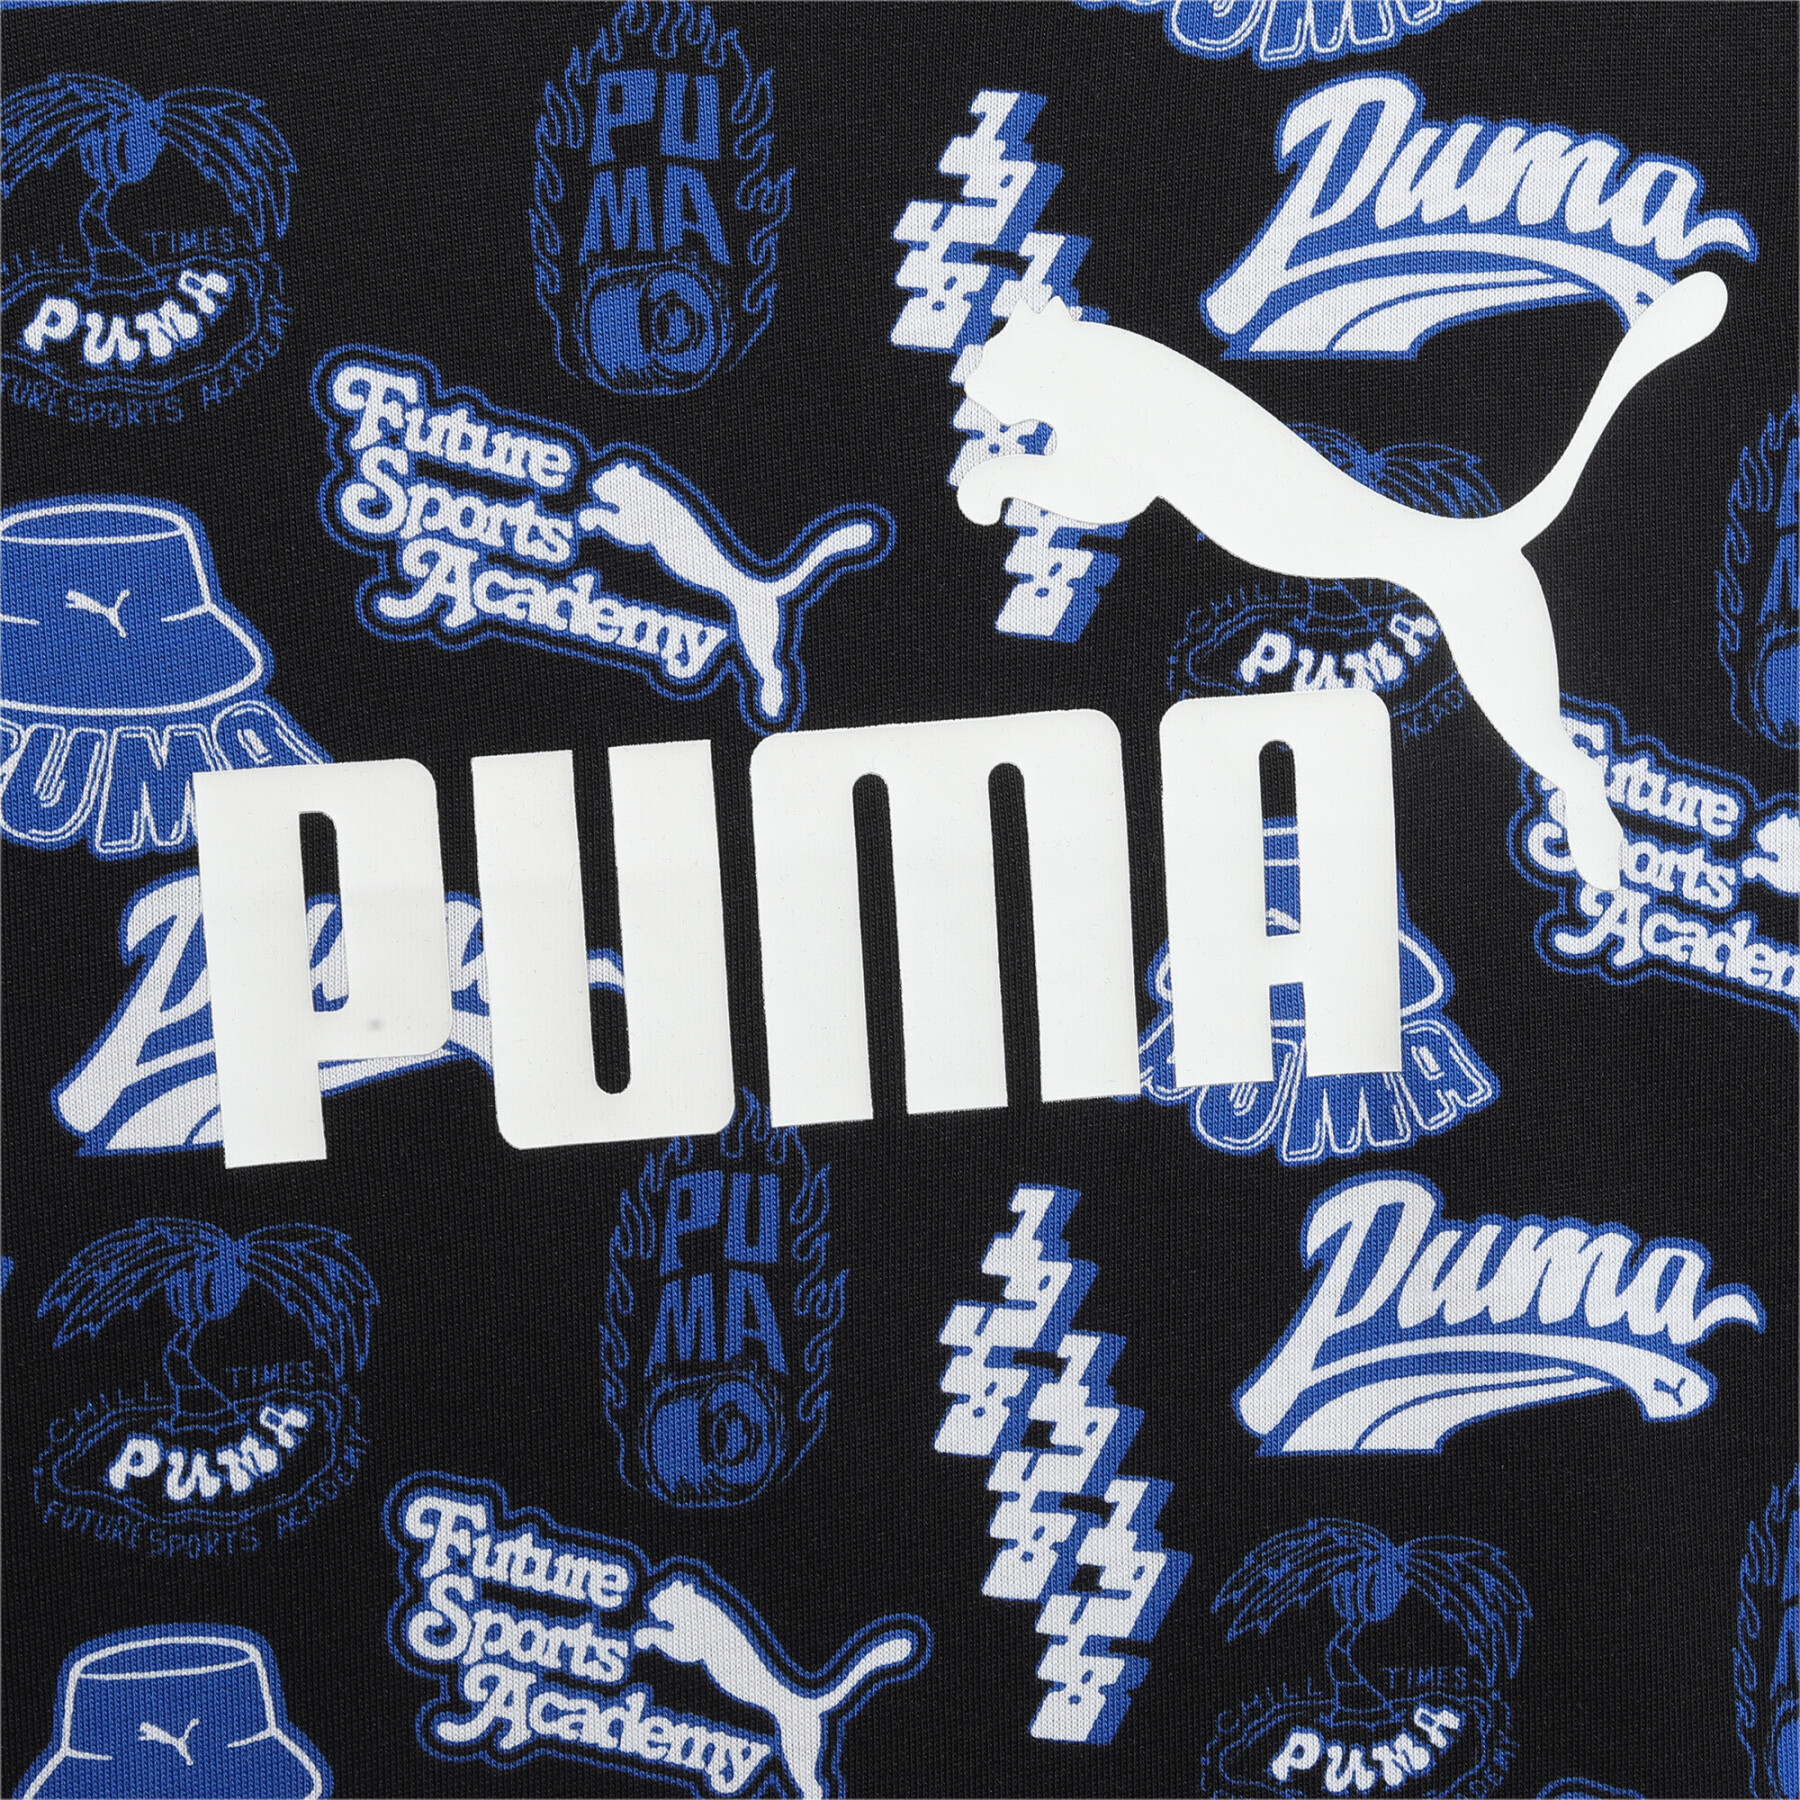 T-shirt à motif enfant Puma All Over 90's ESS+